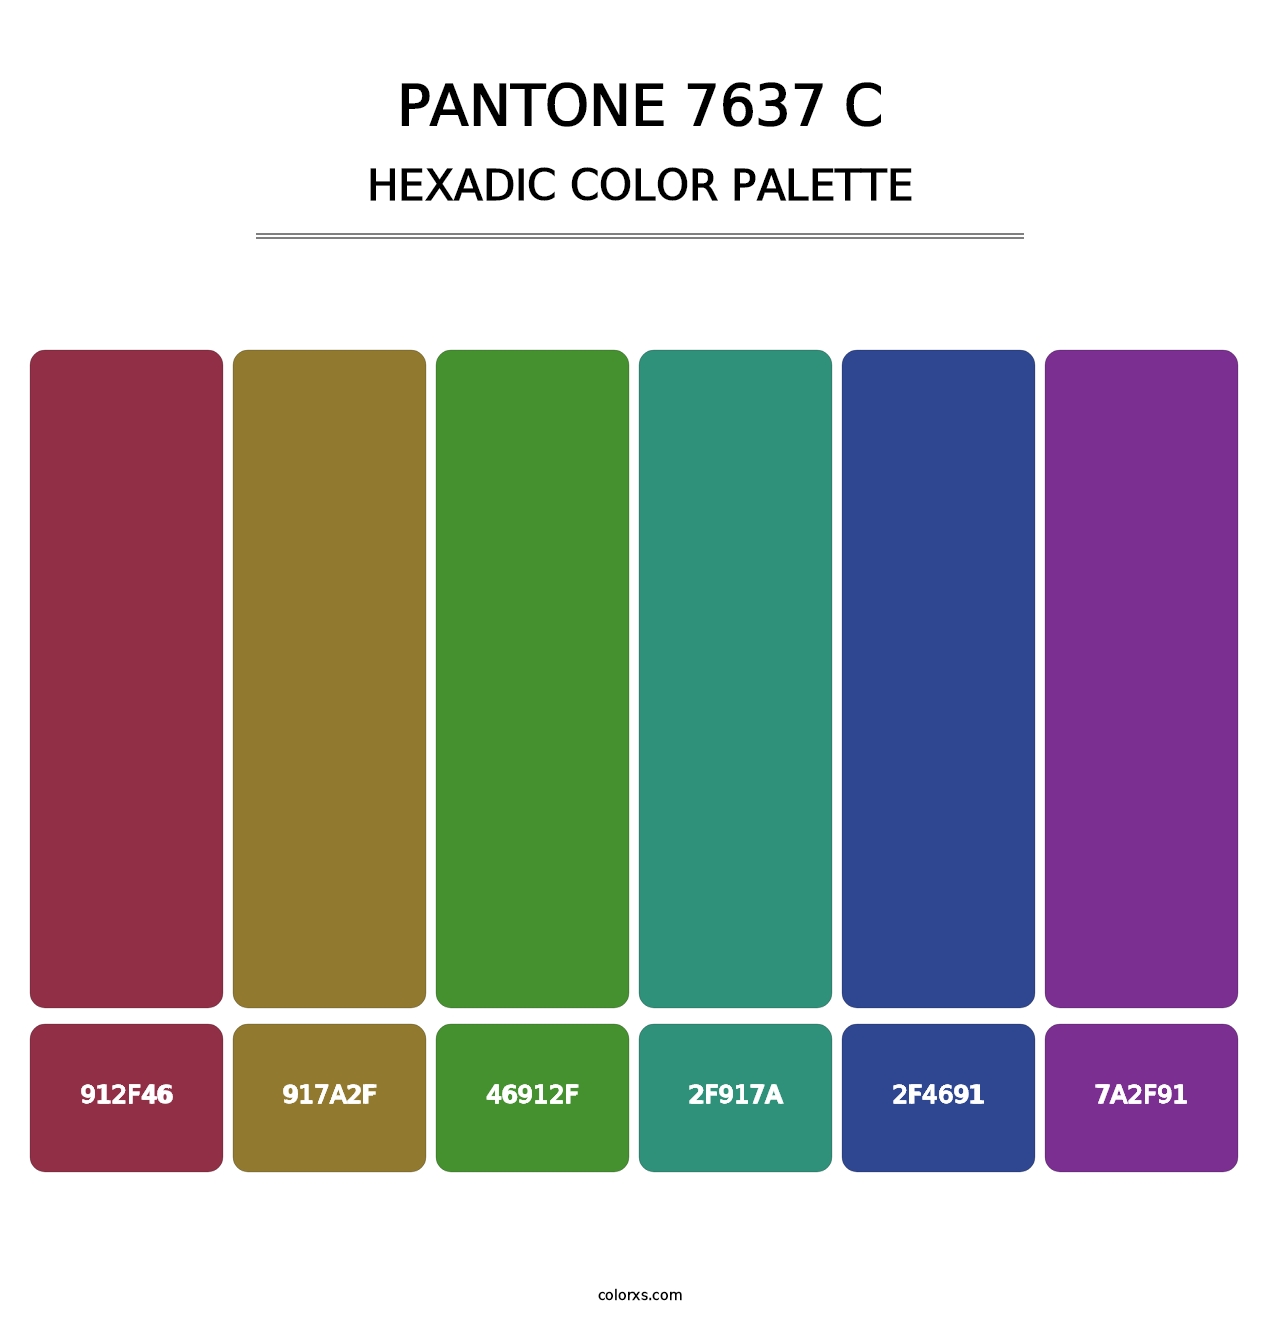 PANTONE 7637 C - Hexadic Color Palette